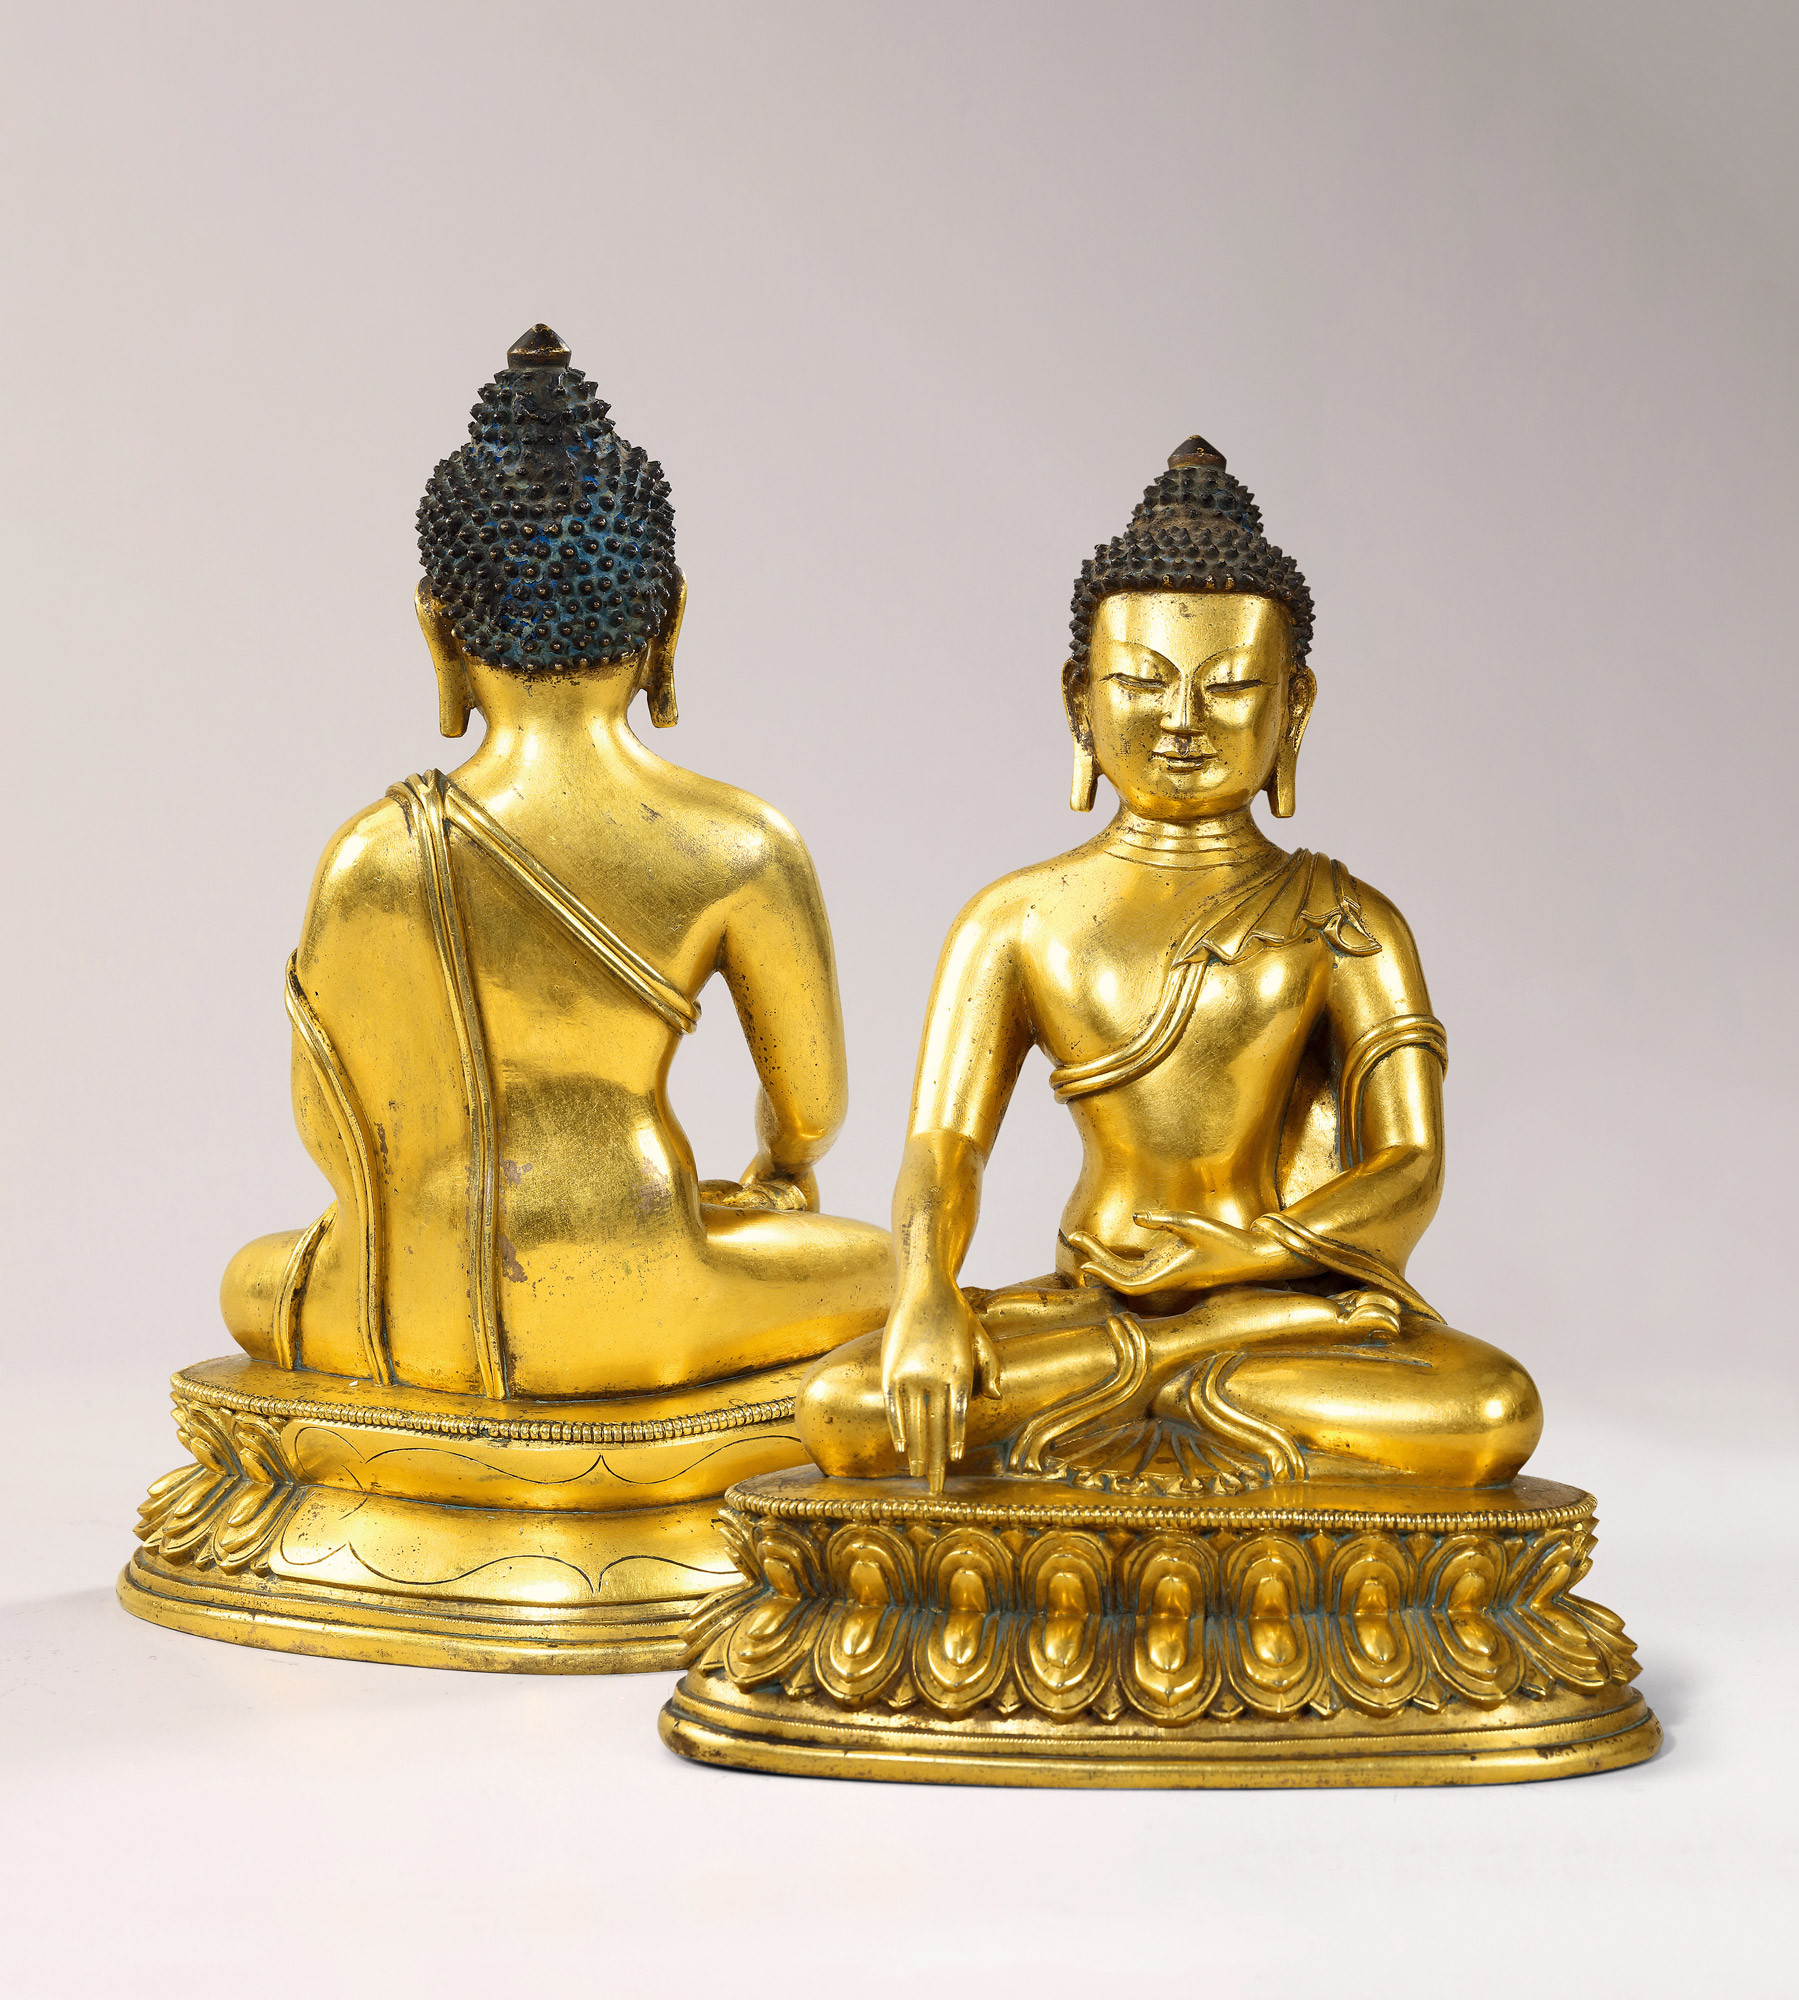 A gilt-bronze figure of sakyamuni